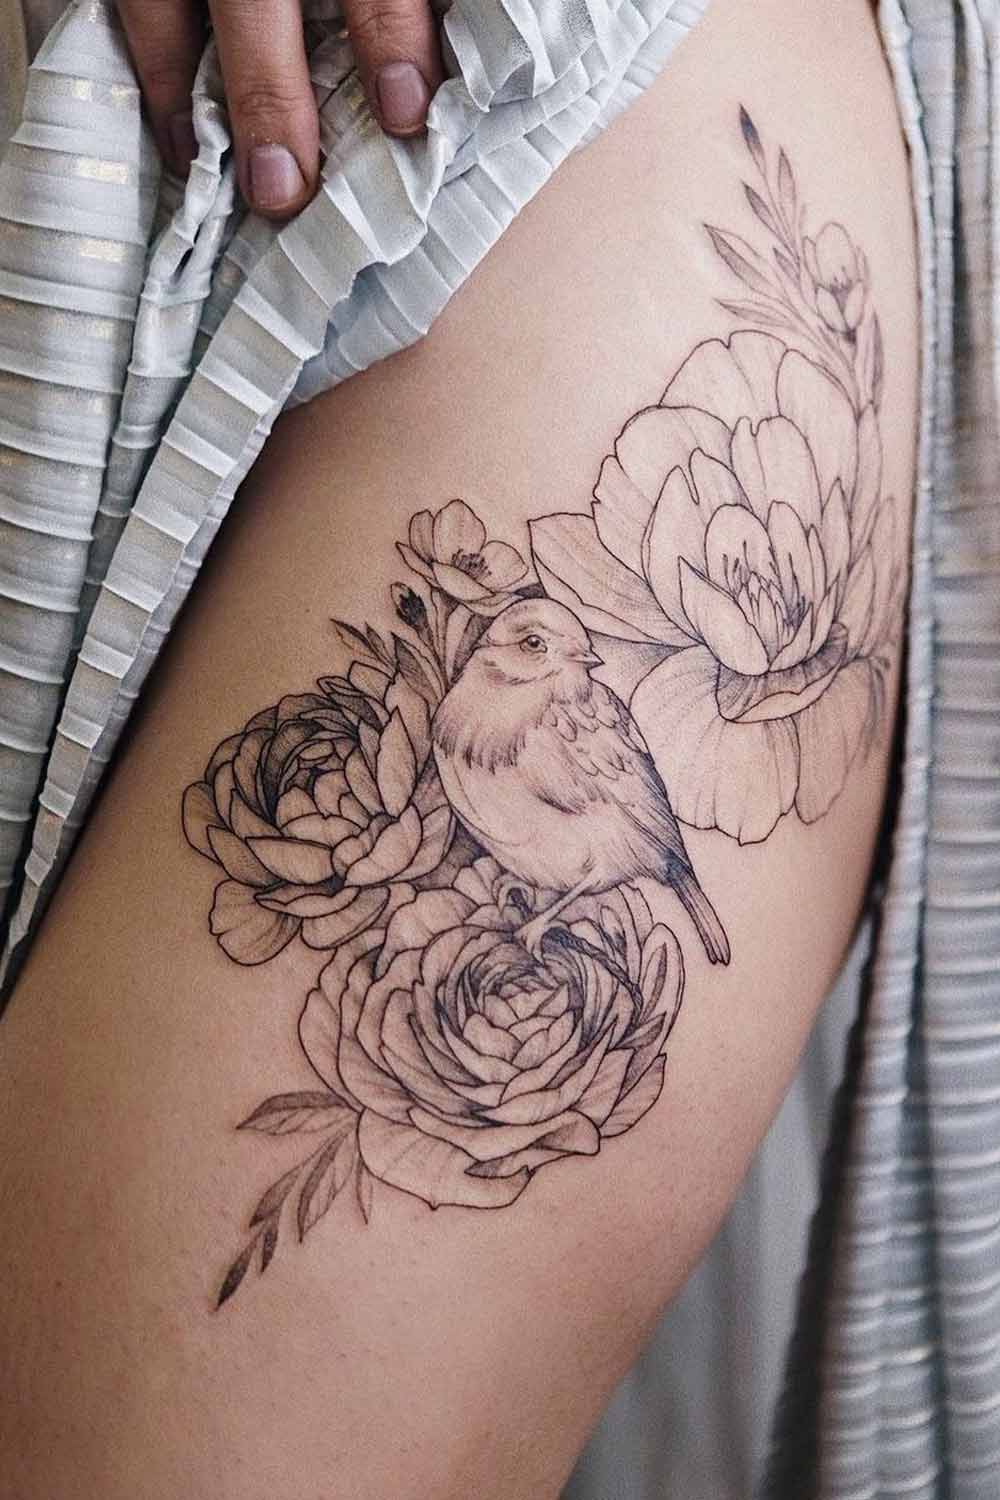 A Bird with Flowers Tattoo Idea